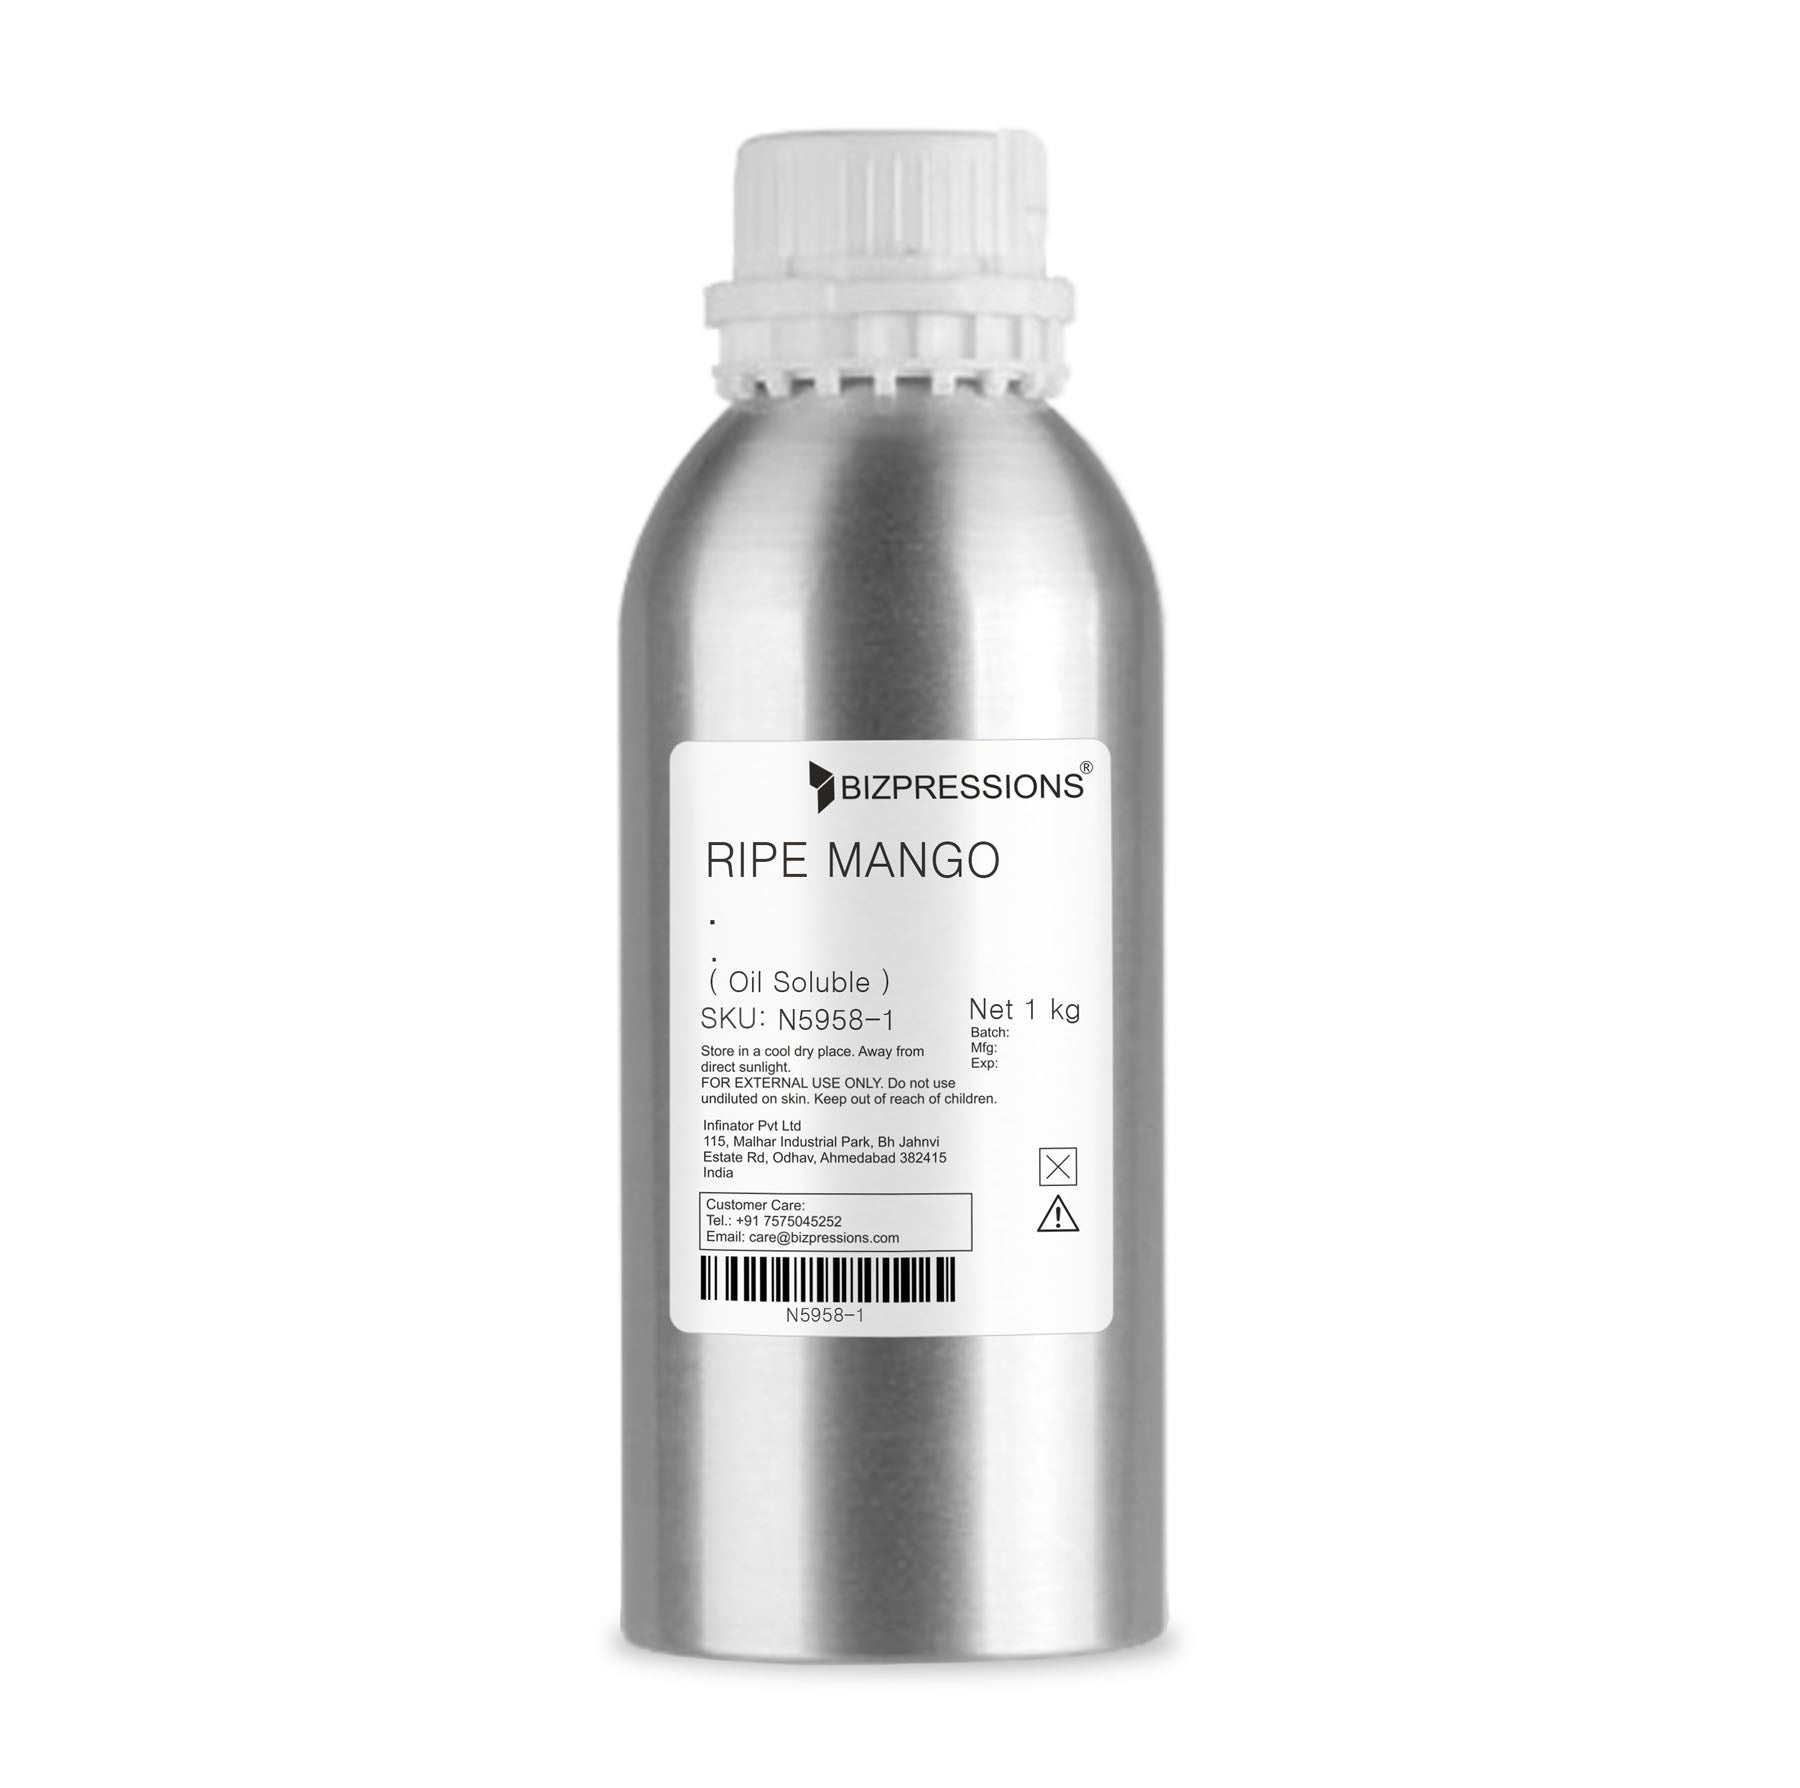 RIPE MANGO - Fragrance ( Oil Soluble ) - 1 kg